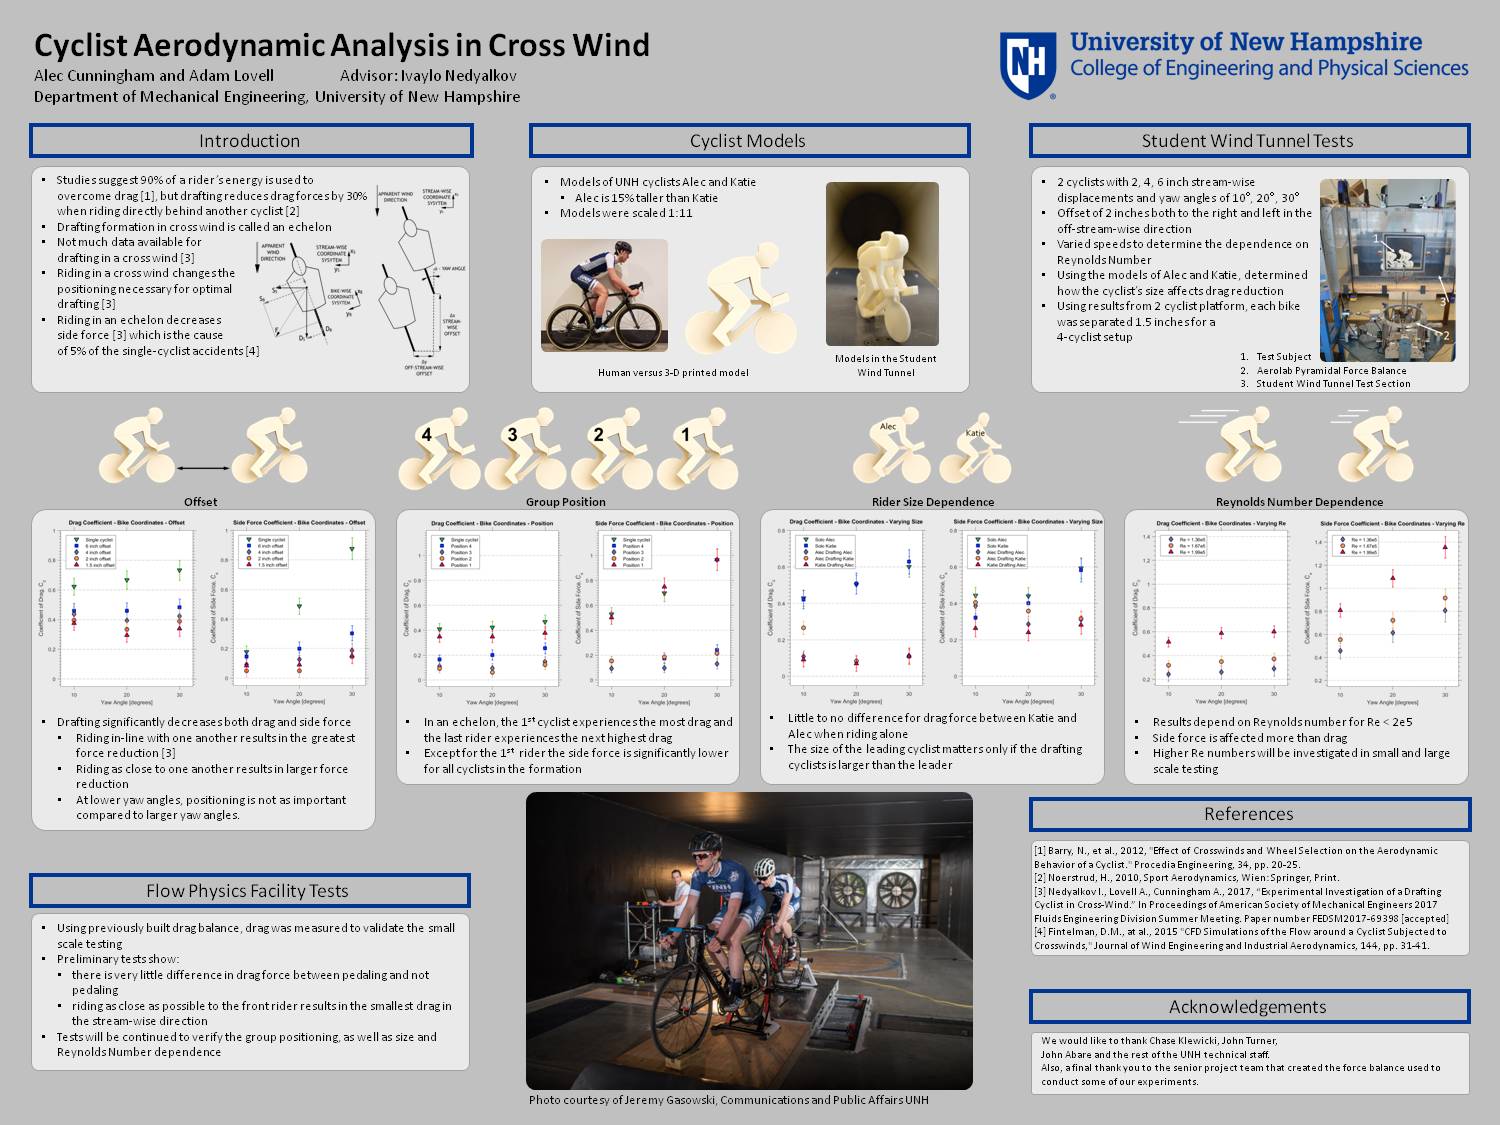 Cyclist Aerodynamic Analysis In Cross Wind by acunningham1